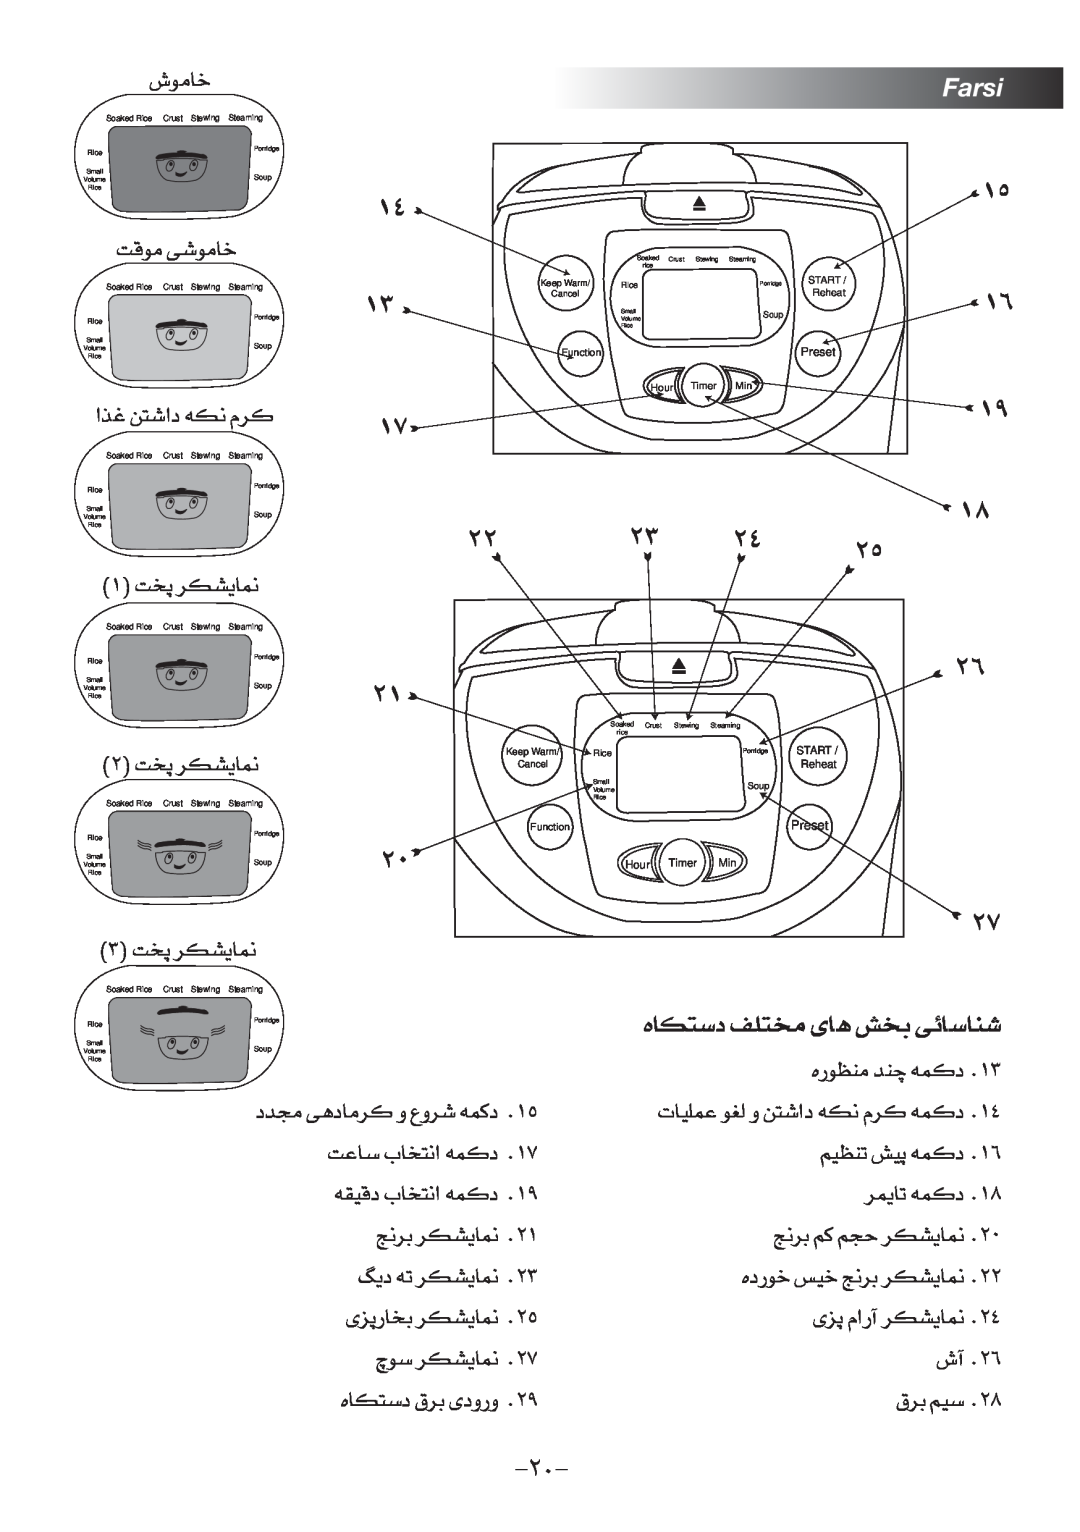 Black & Decker RC75 manual îU±u‘, Farsi 